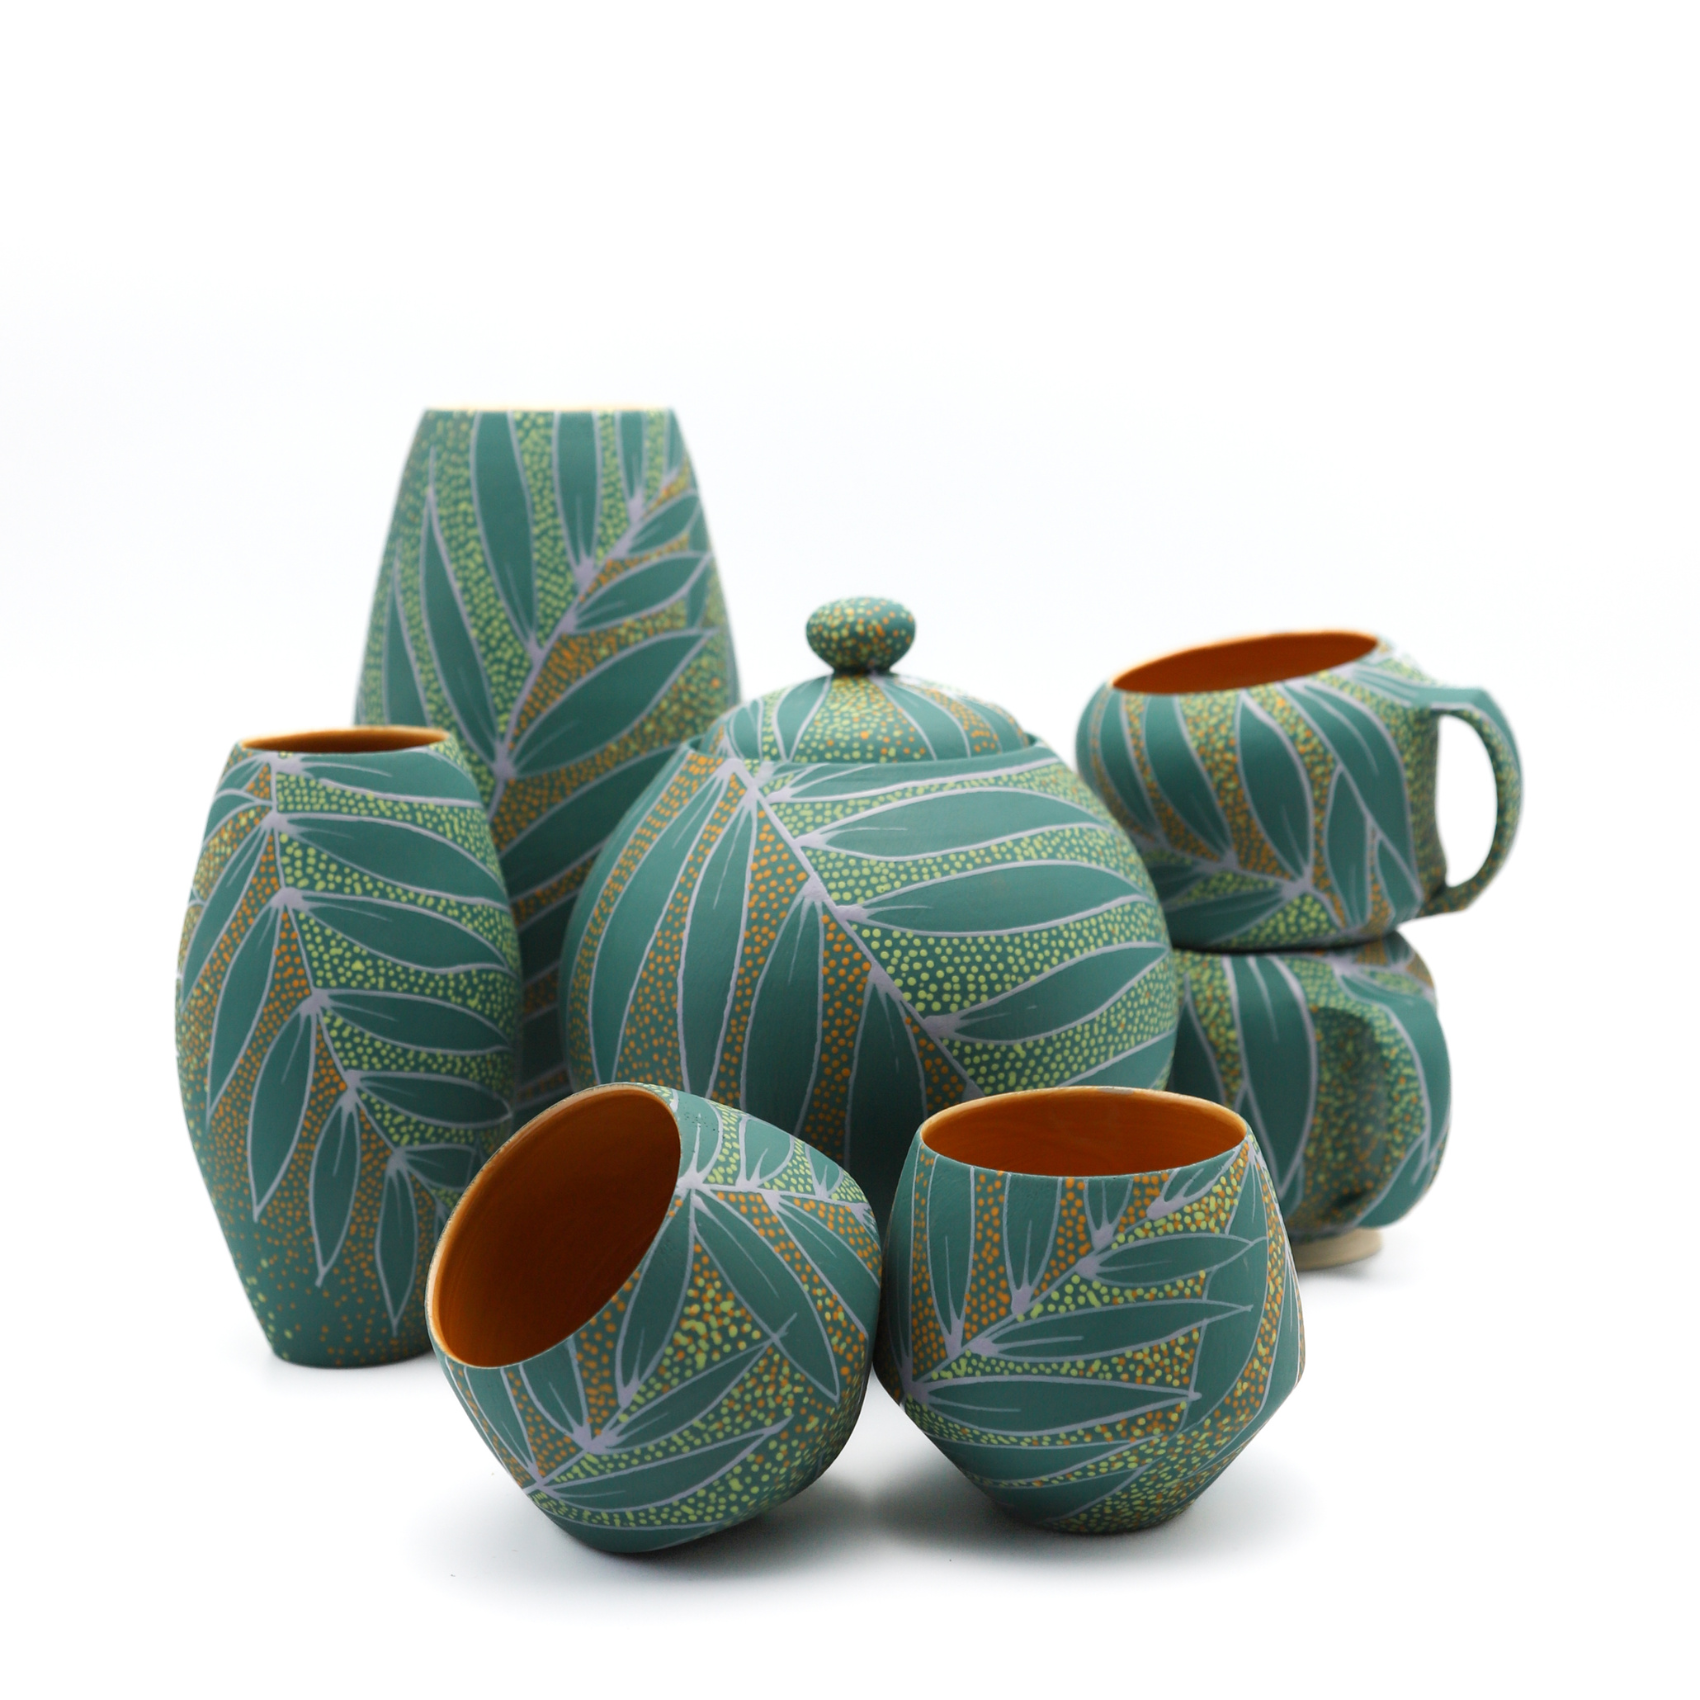 Leaf ceramic collection